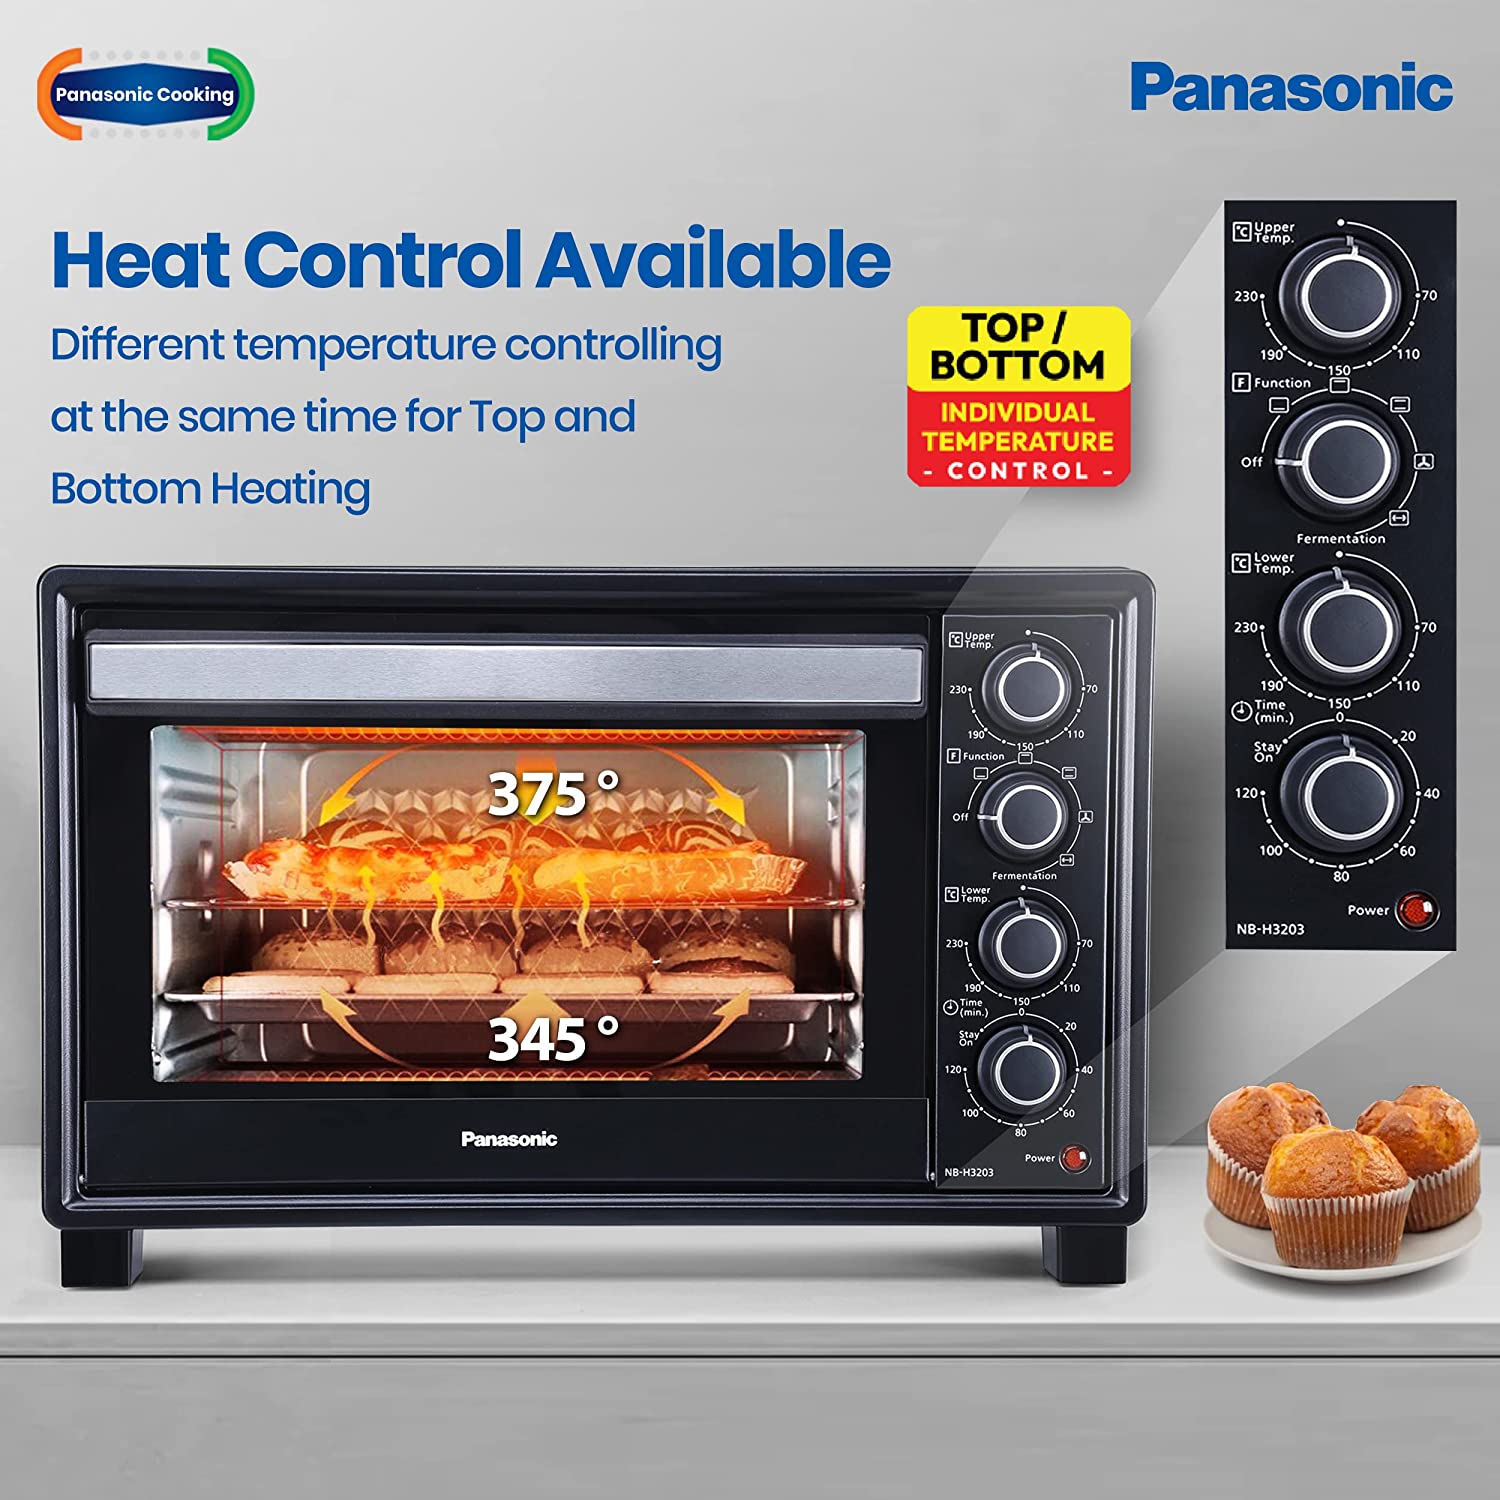 Panasonic NB-H3203 32 Liter 1500 Watt Oven Toaster Grill 